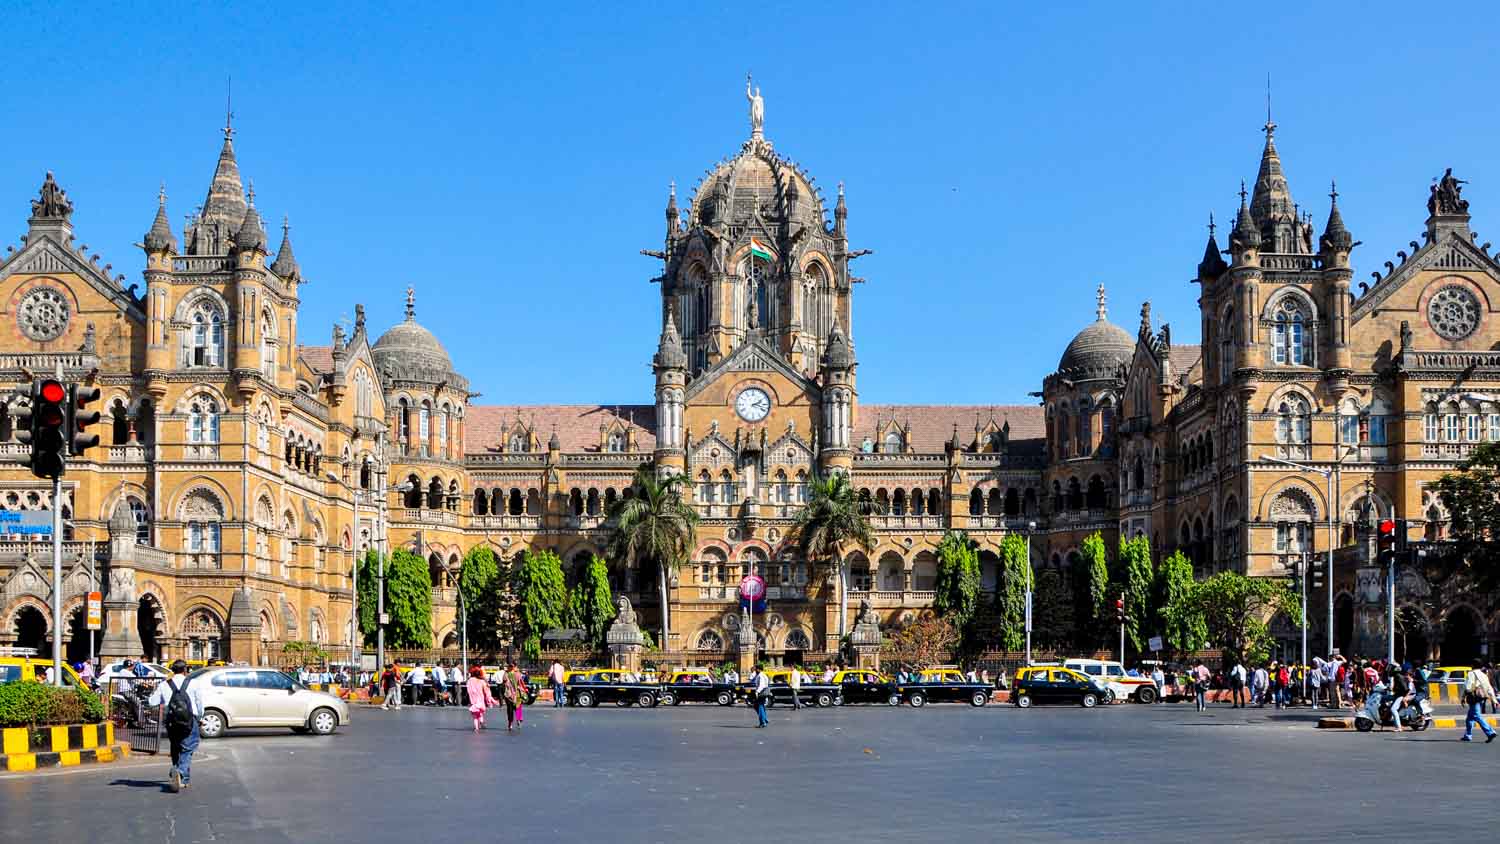 Places to Visit In Mumbai